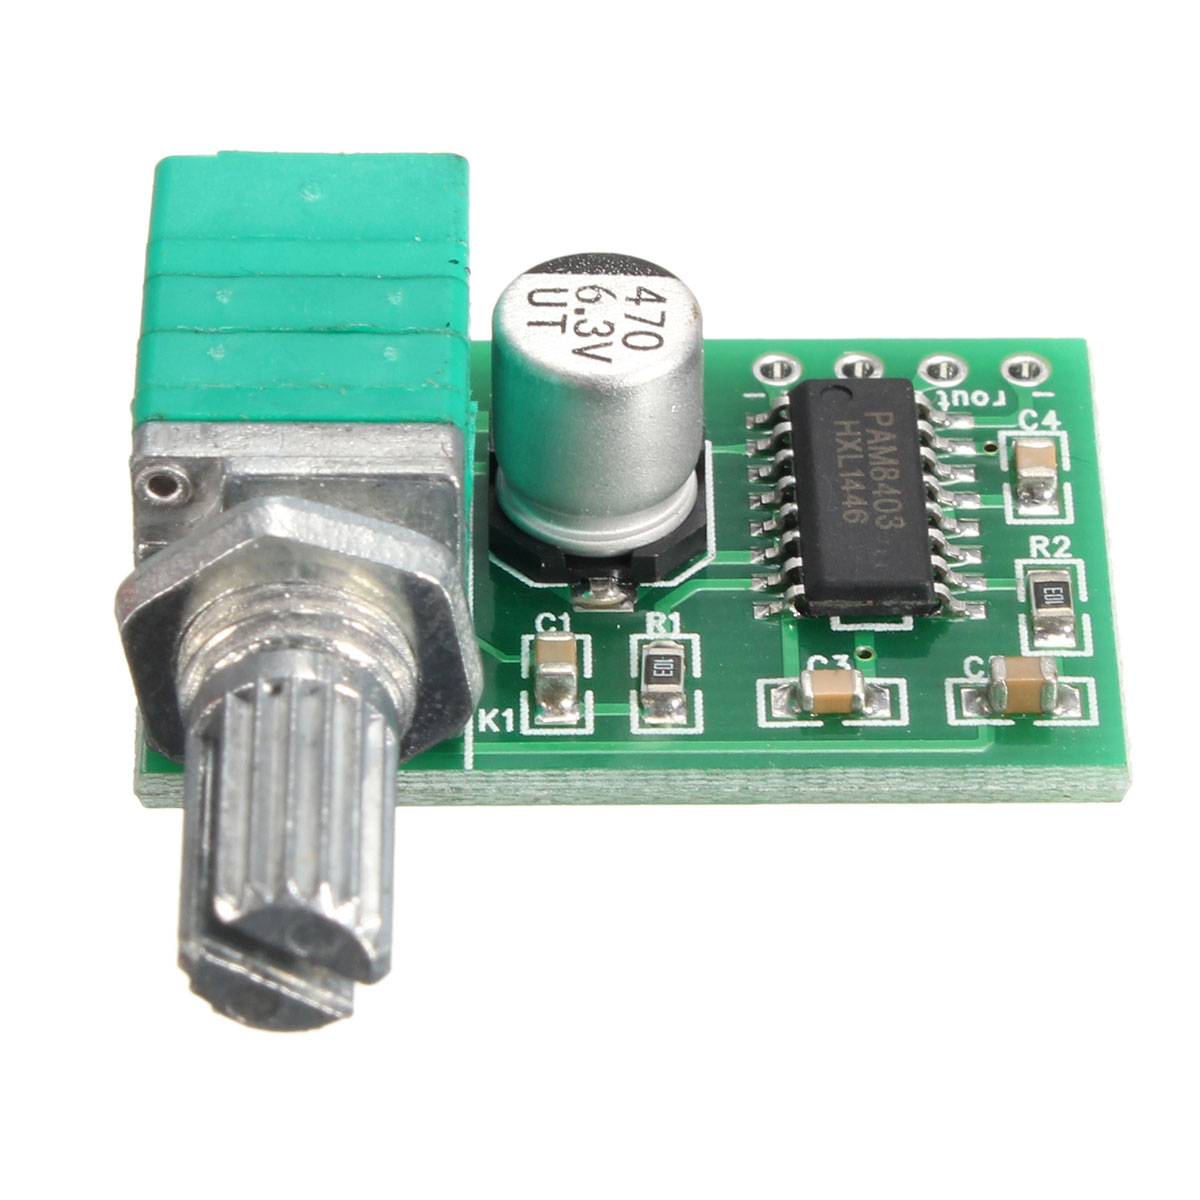 5pcs-PAM8403-2-Channel-USB-Power-Audio-Amplifier-Module-Board-3Wx2-Volume-Control-1328600